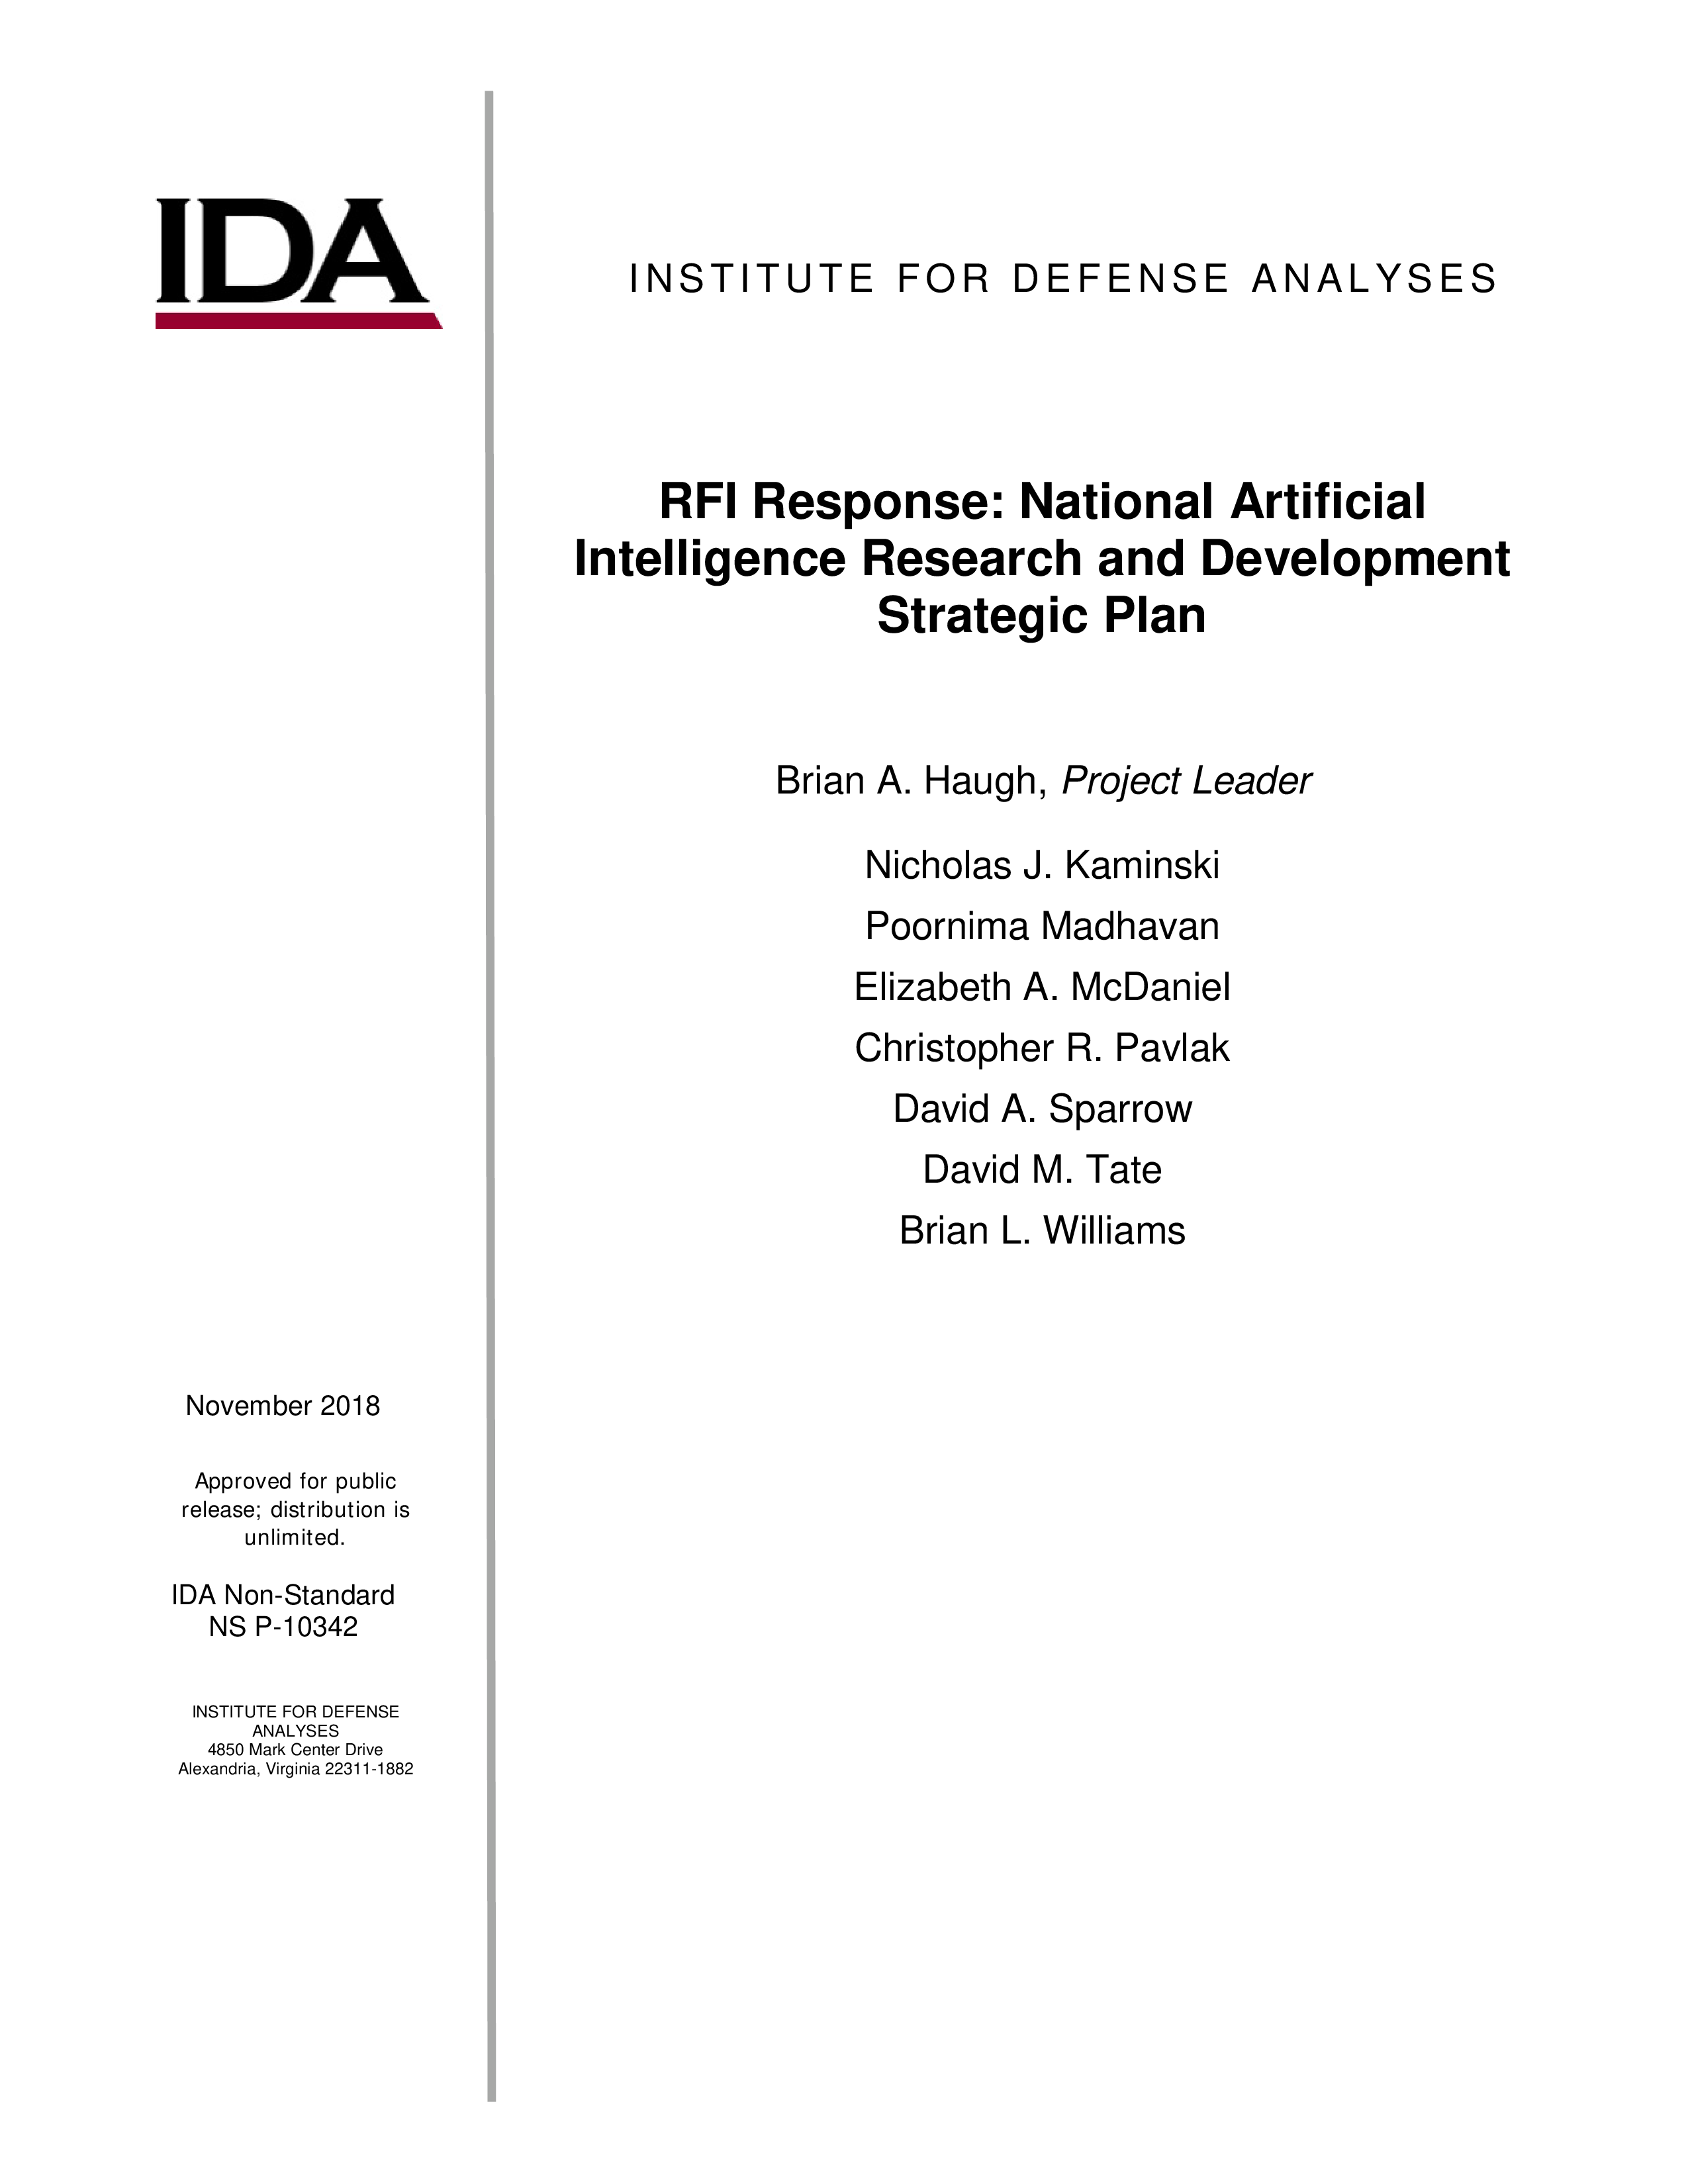 RFI Response: National Artificial Intelligence Research and Development Strategic Plan